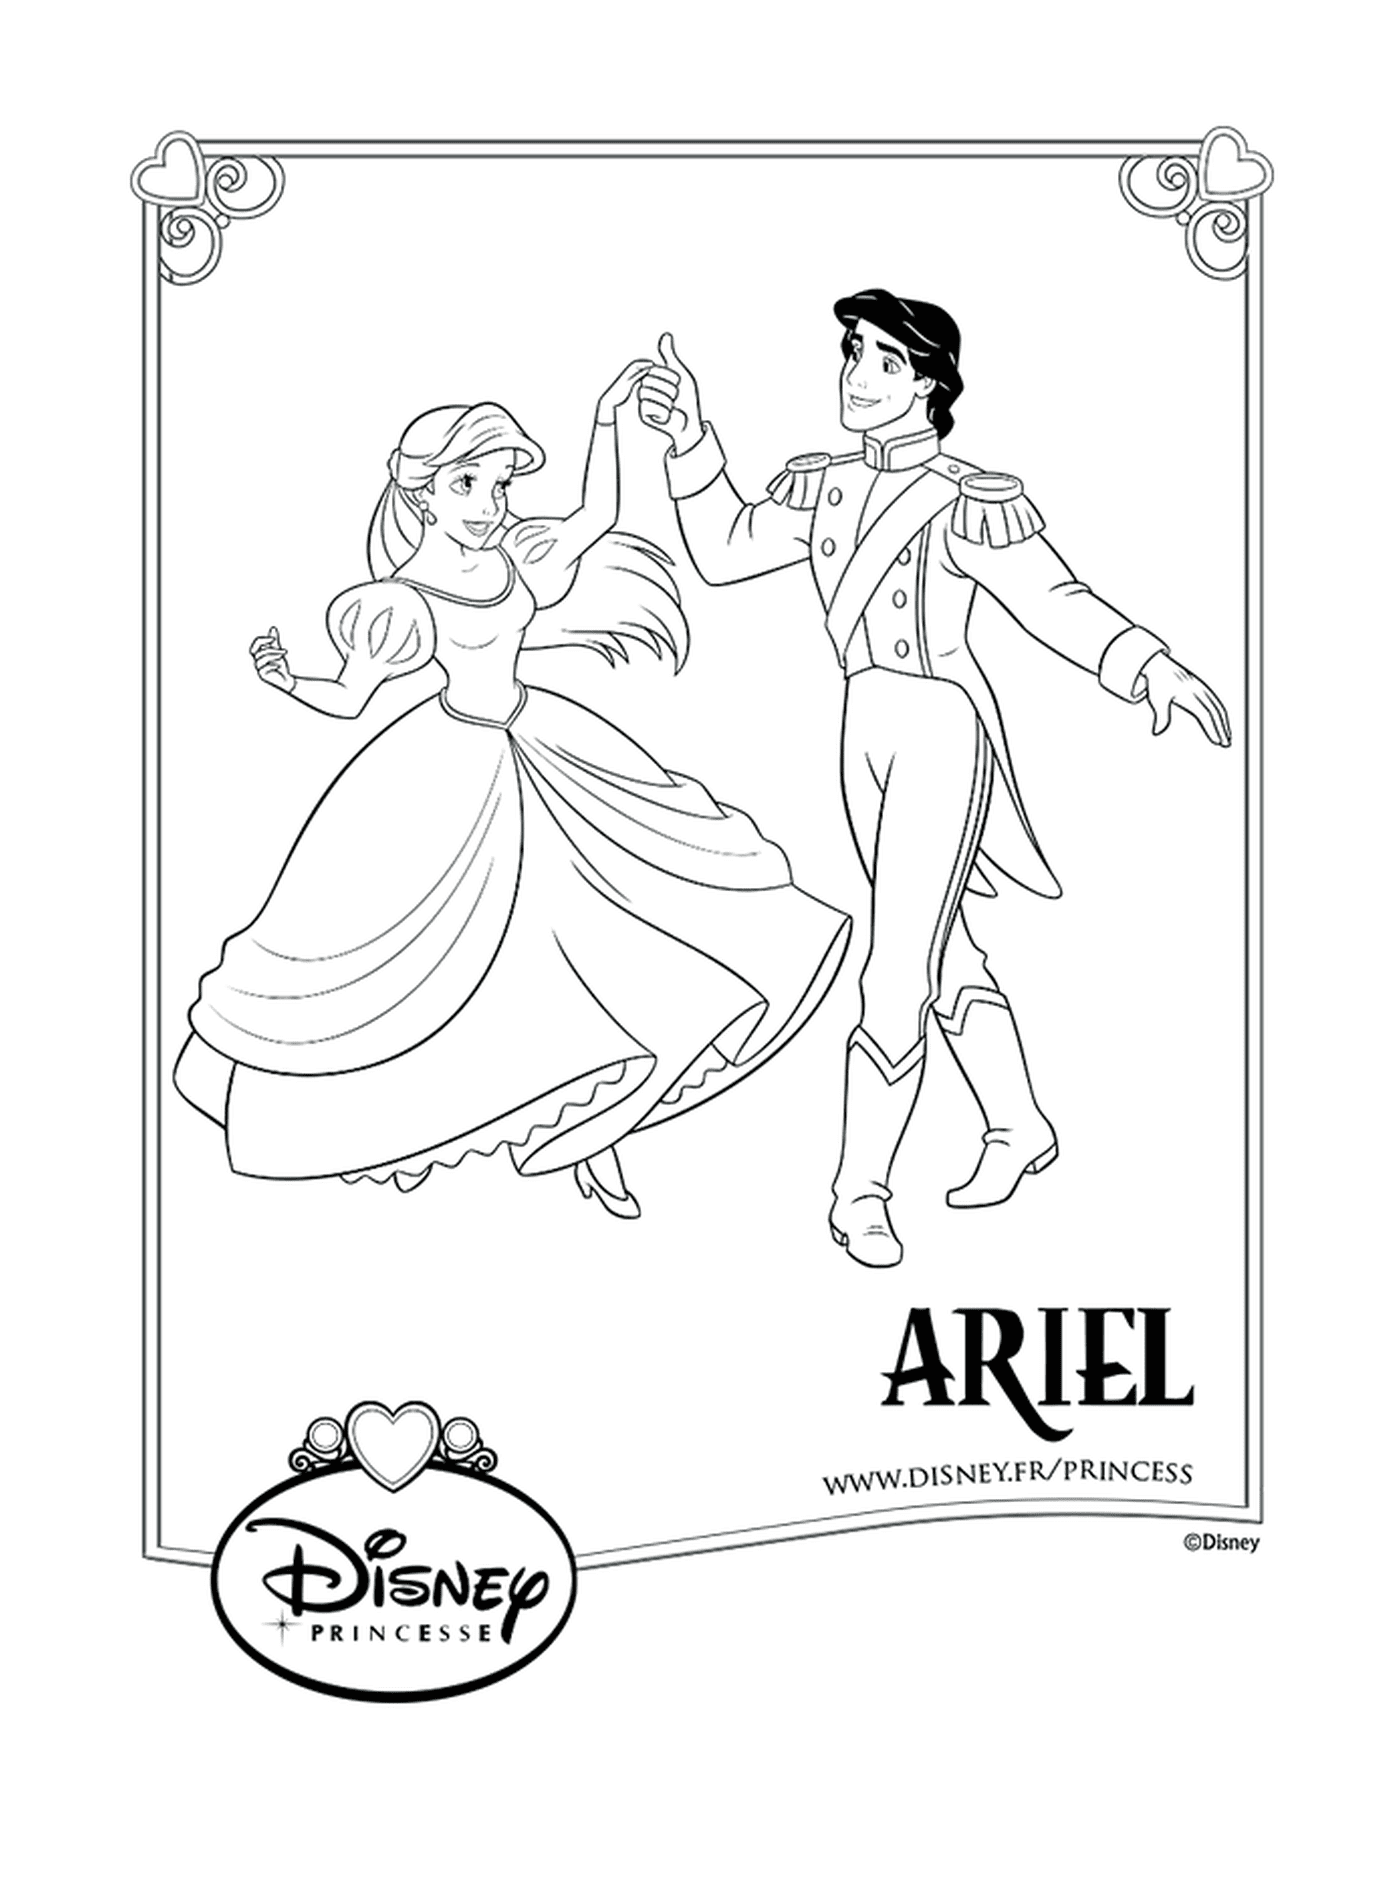  Ariel, a princess dancing 